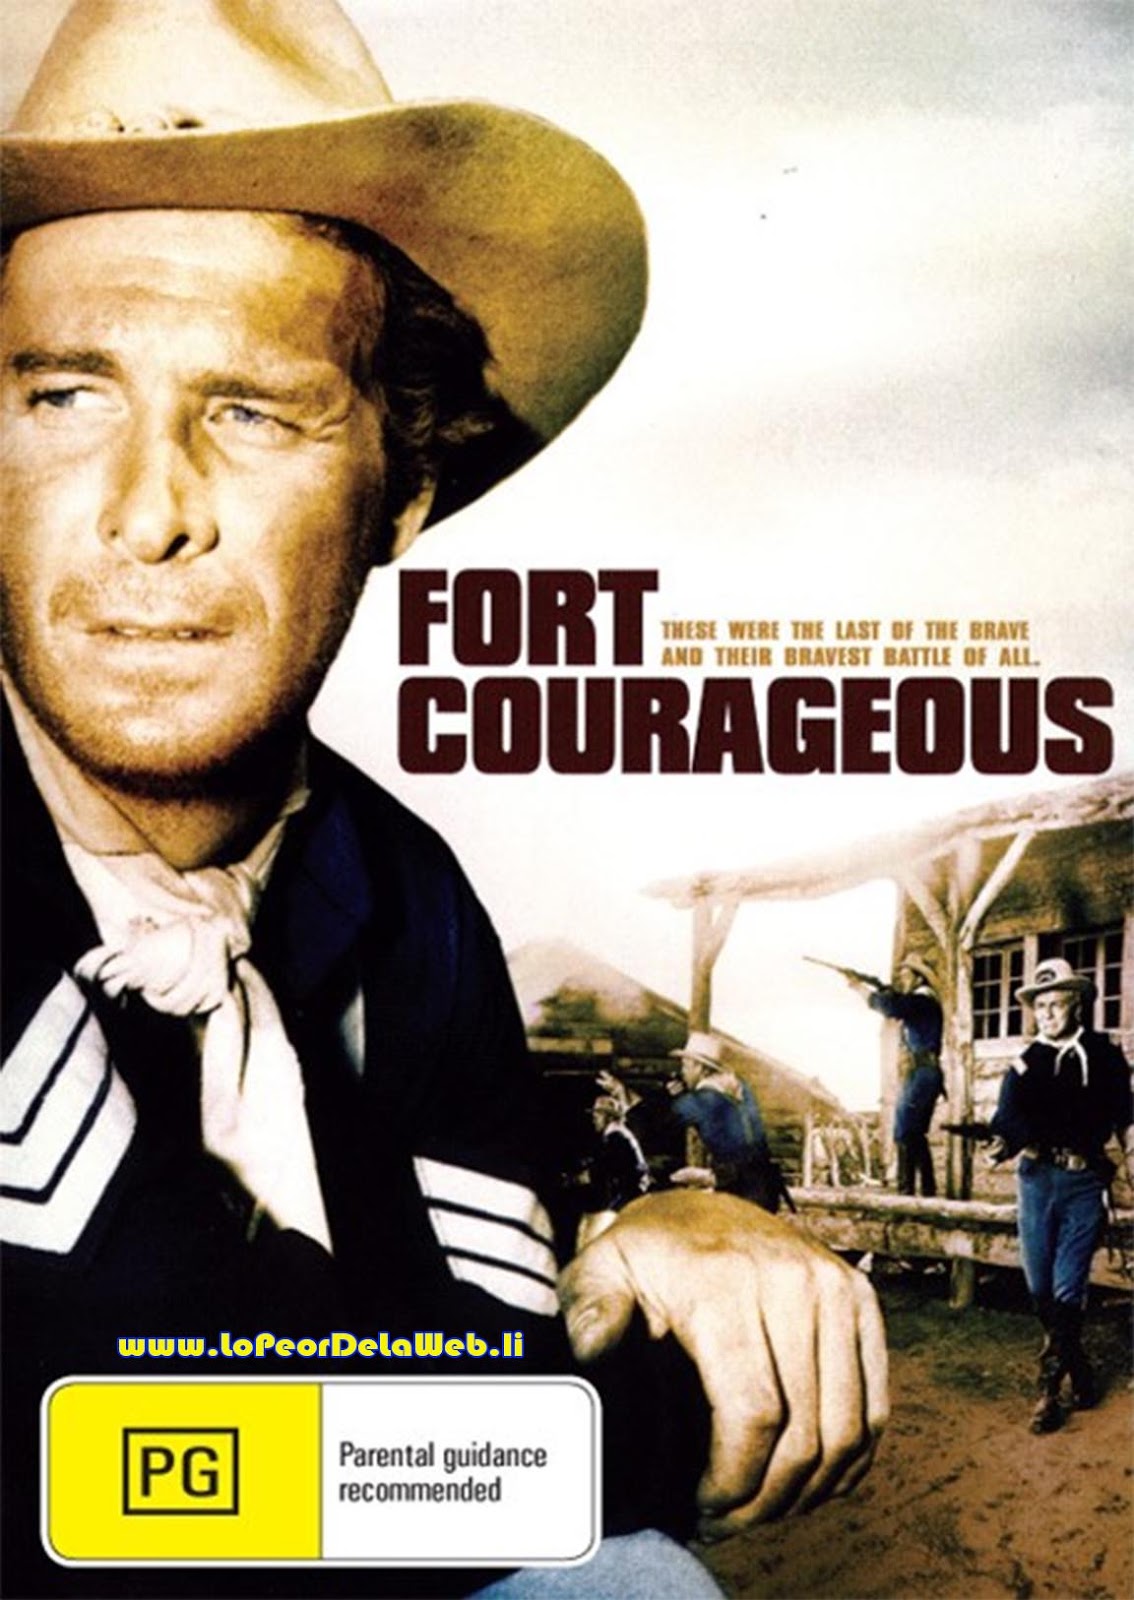 Fuerte Valeroso (Fort Courageous) -1965 - Western